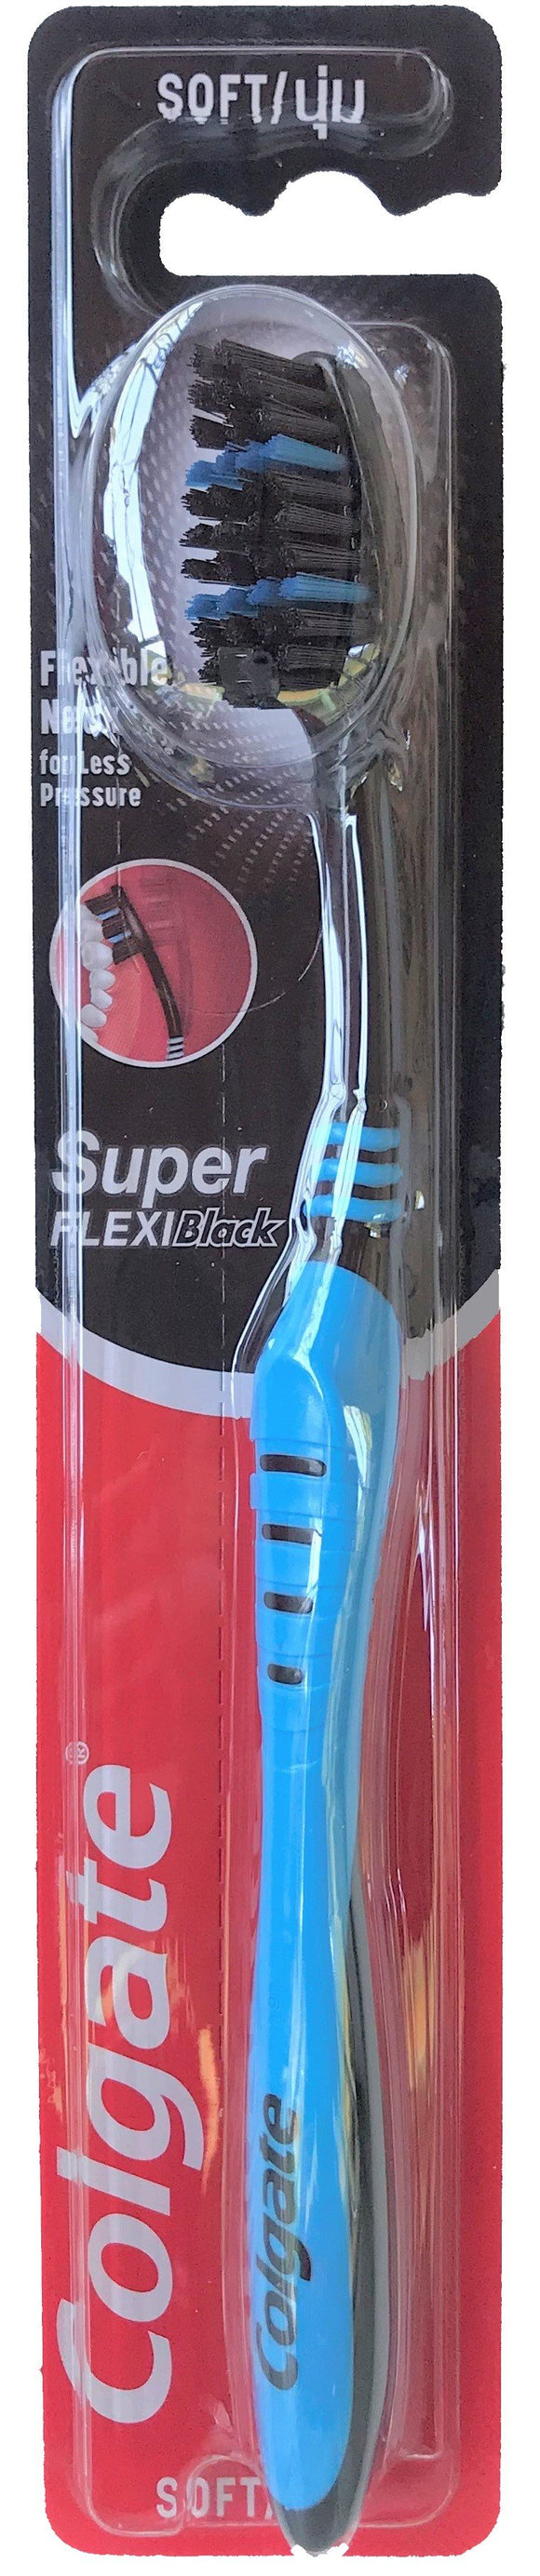 Colgate Toothbrush Super Flexi Black